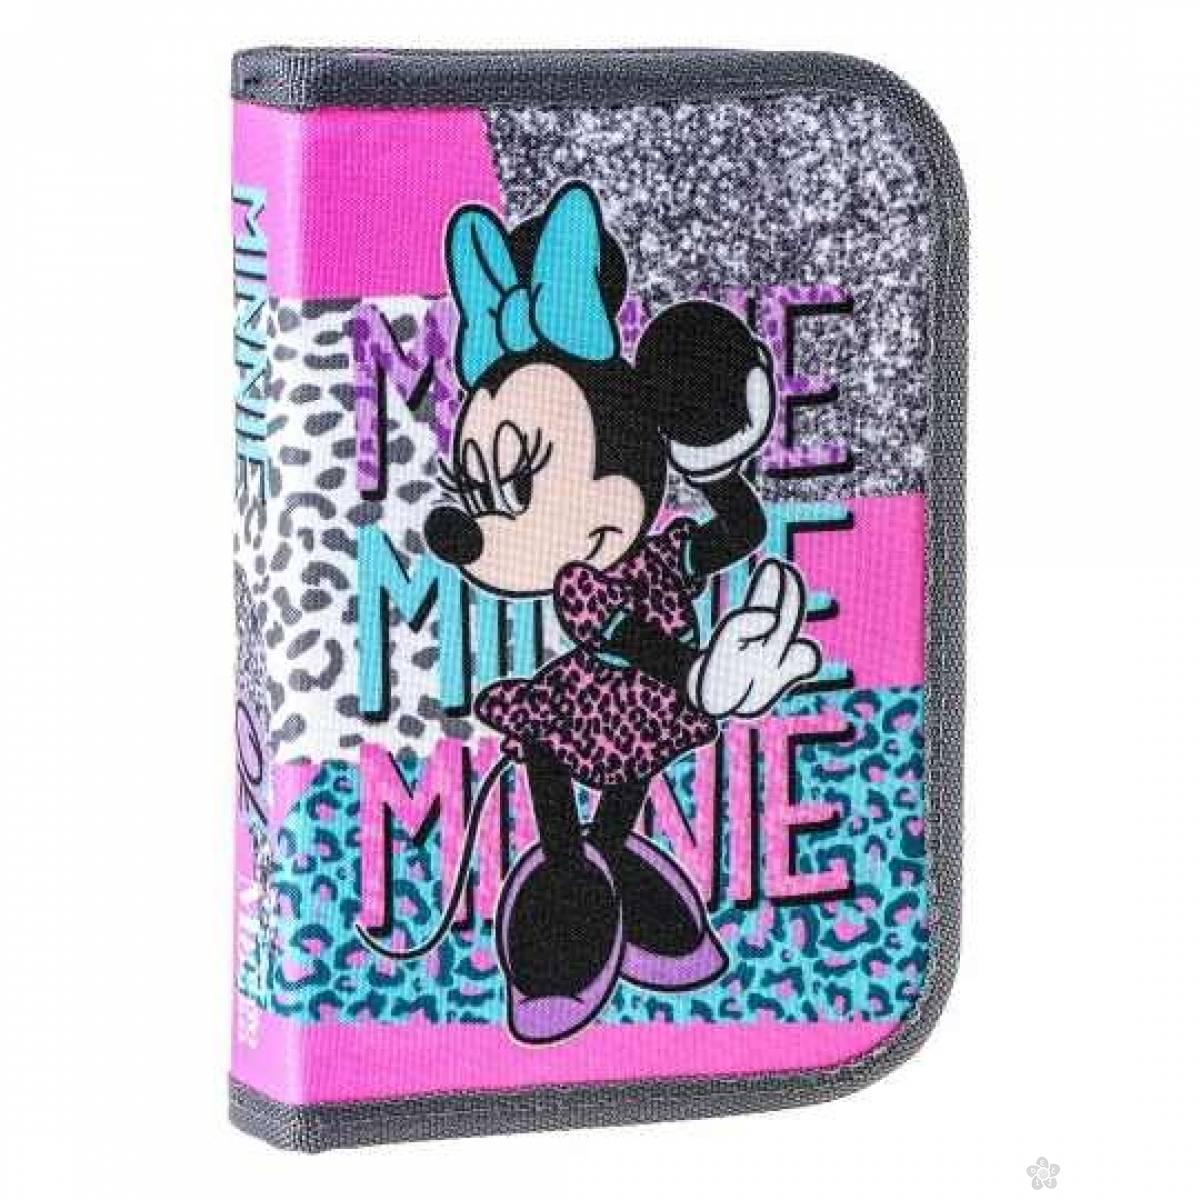 Pernica puna 1 zip Minnie Mouse, Wild spirit 318472 